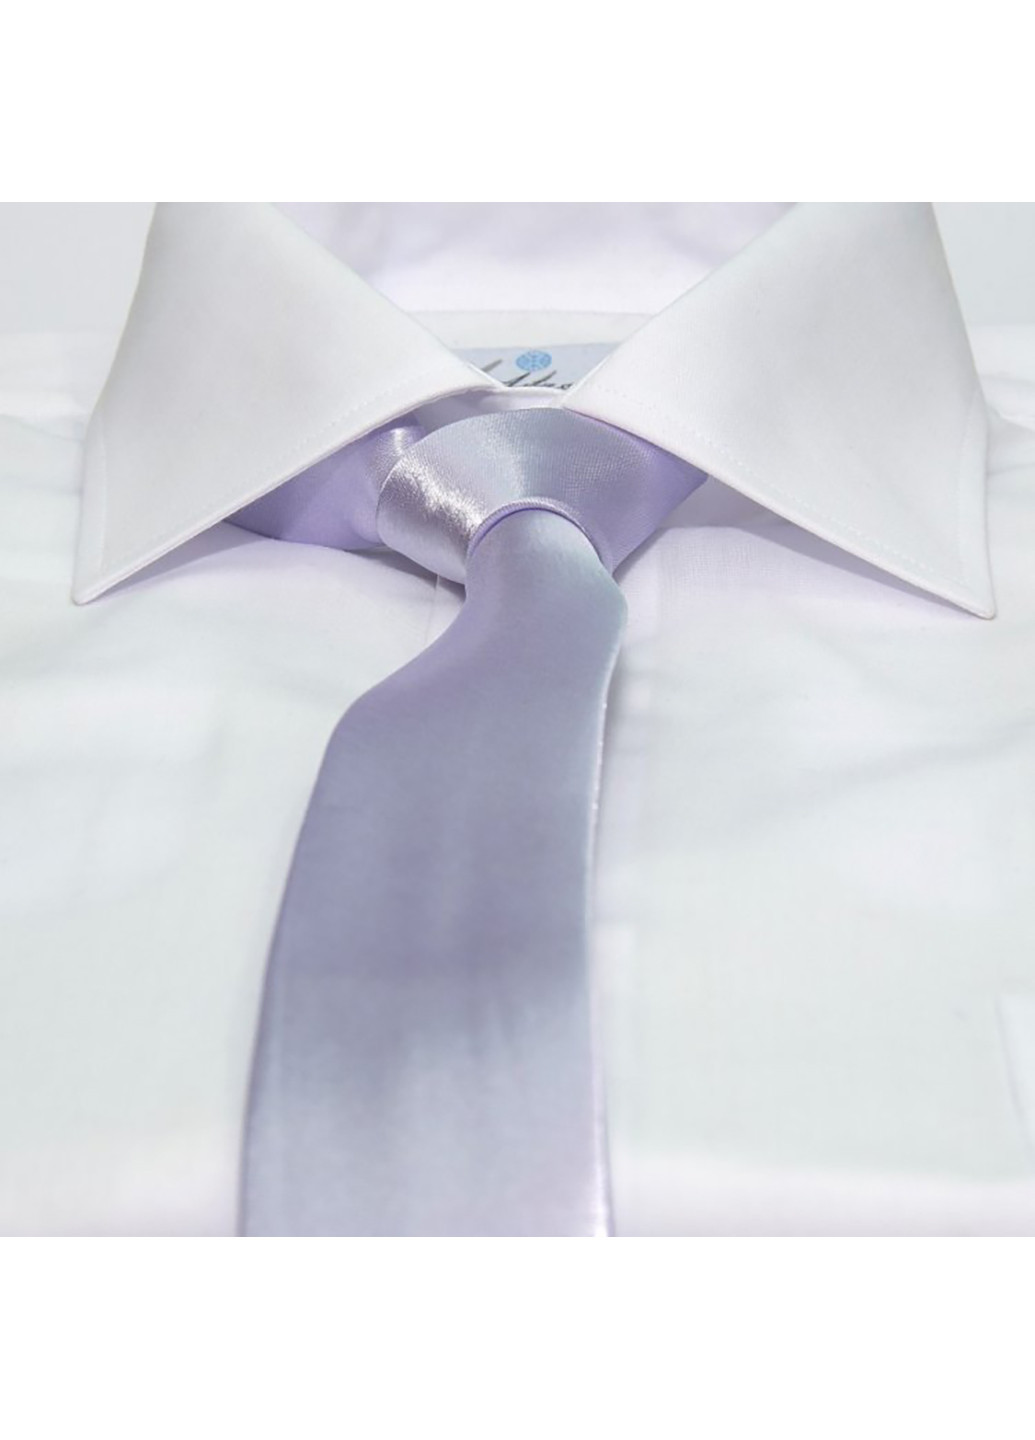 Мужской галстук 5 см Handmade (252132190)